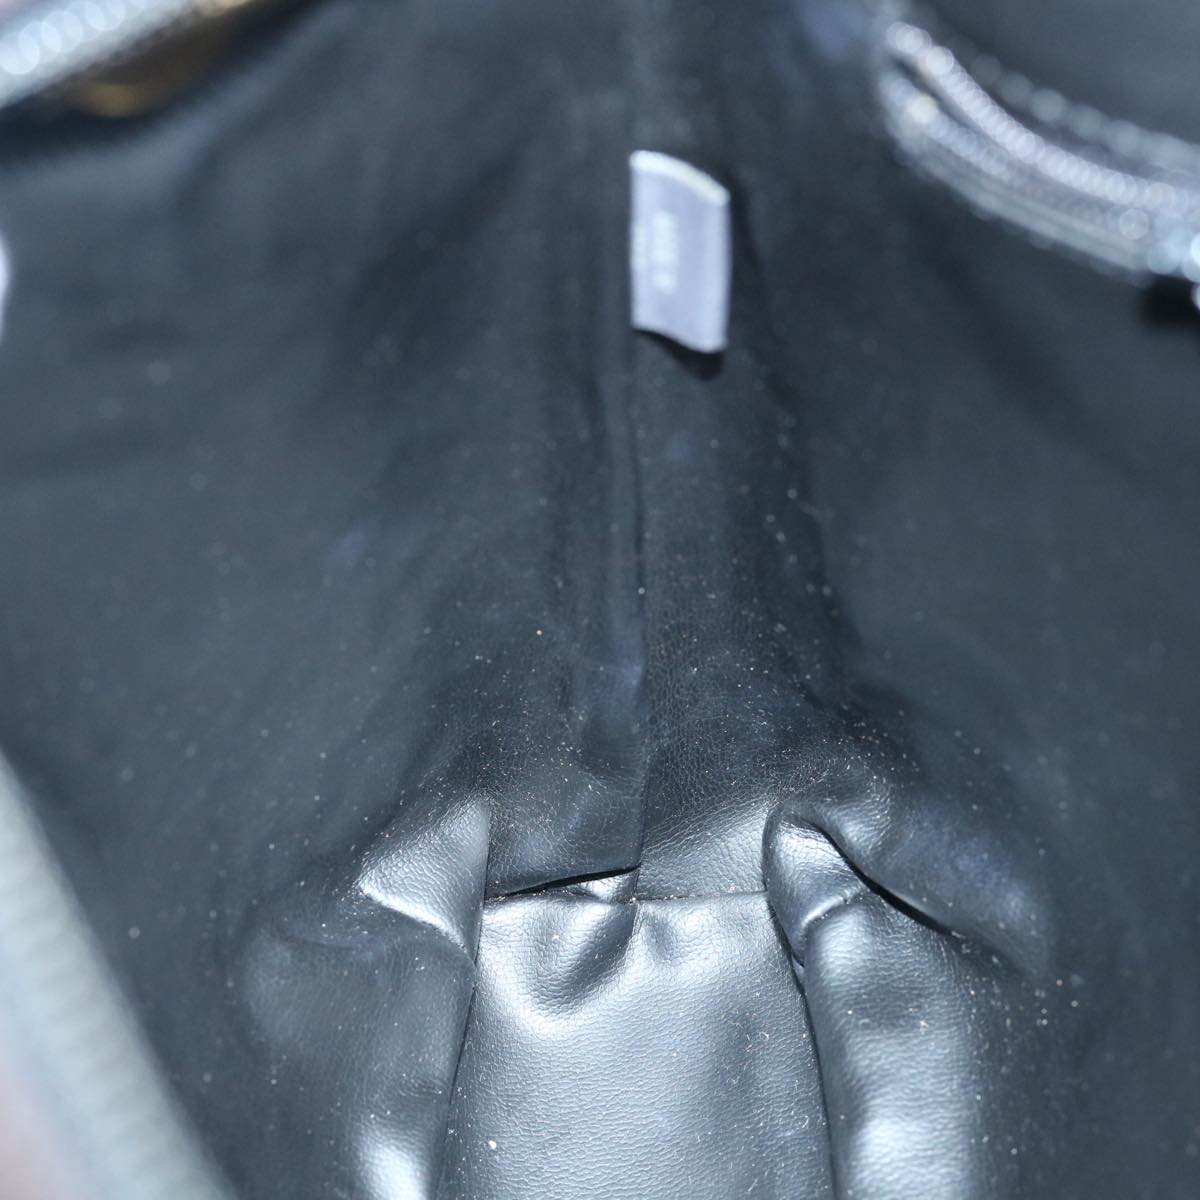 BALLY Matelasse Shoulder Bag Leather Black Auth ki4003